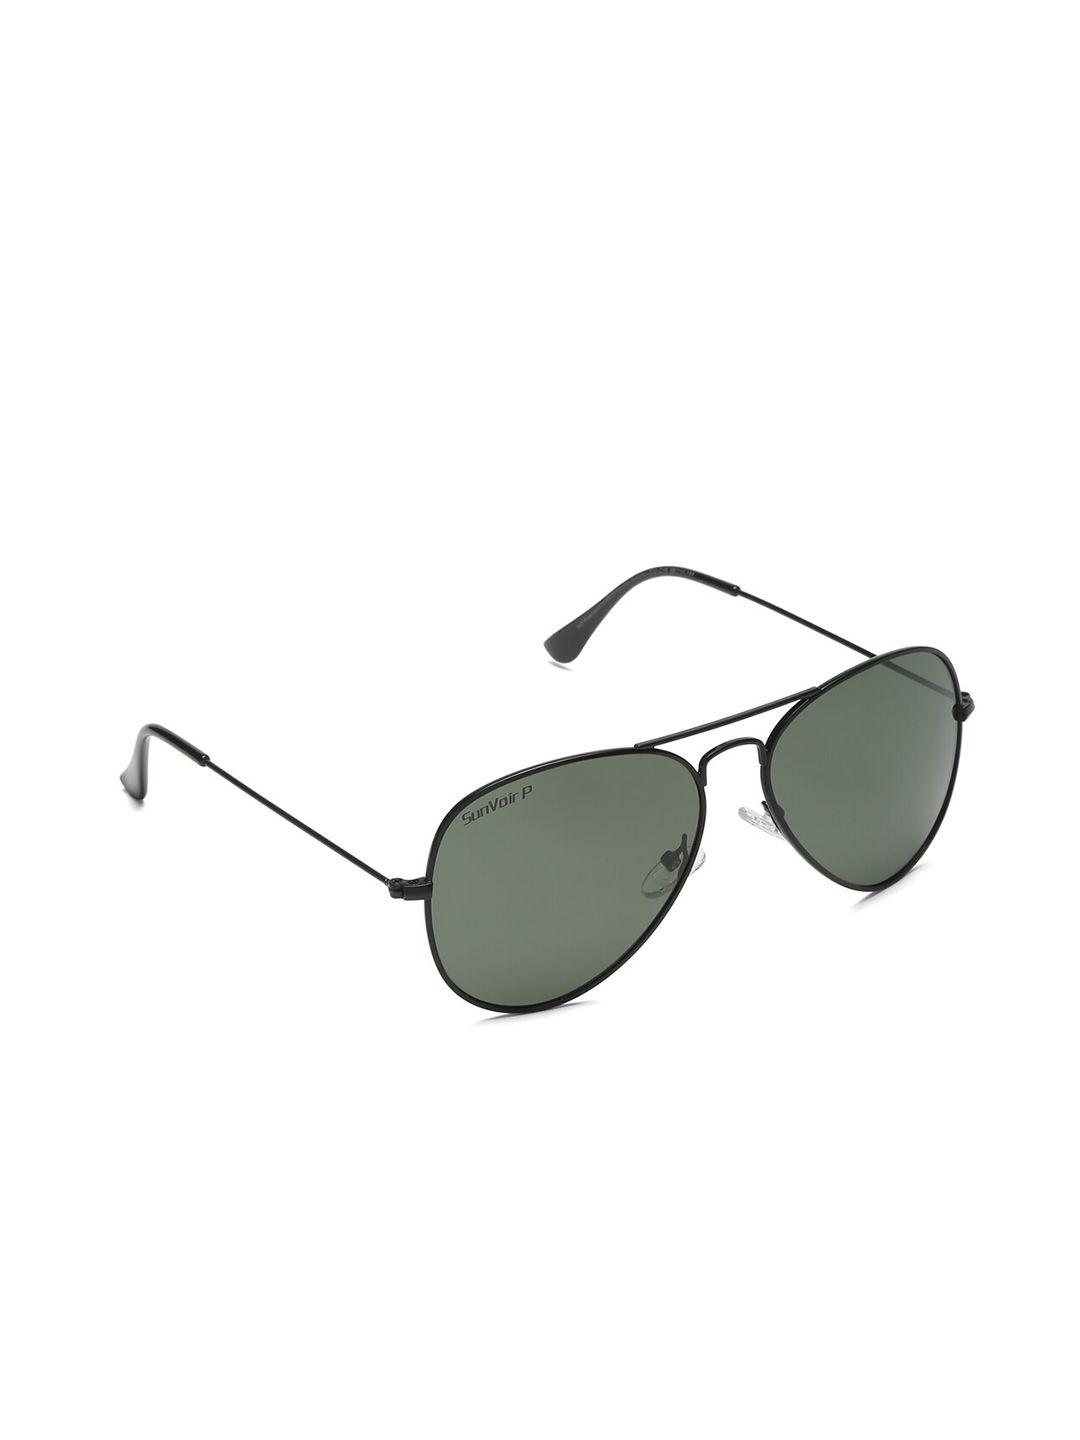 sunvoir unisex green lens & black aviator sunglasses with polarised lens